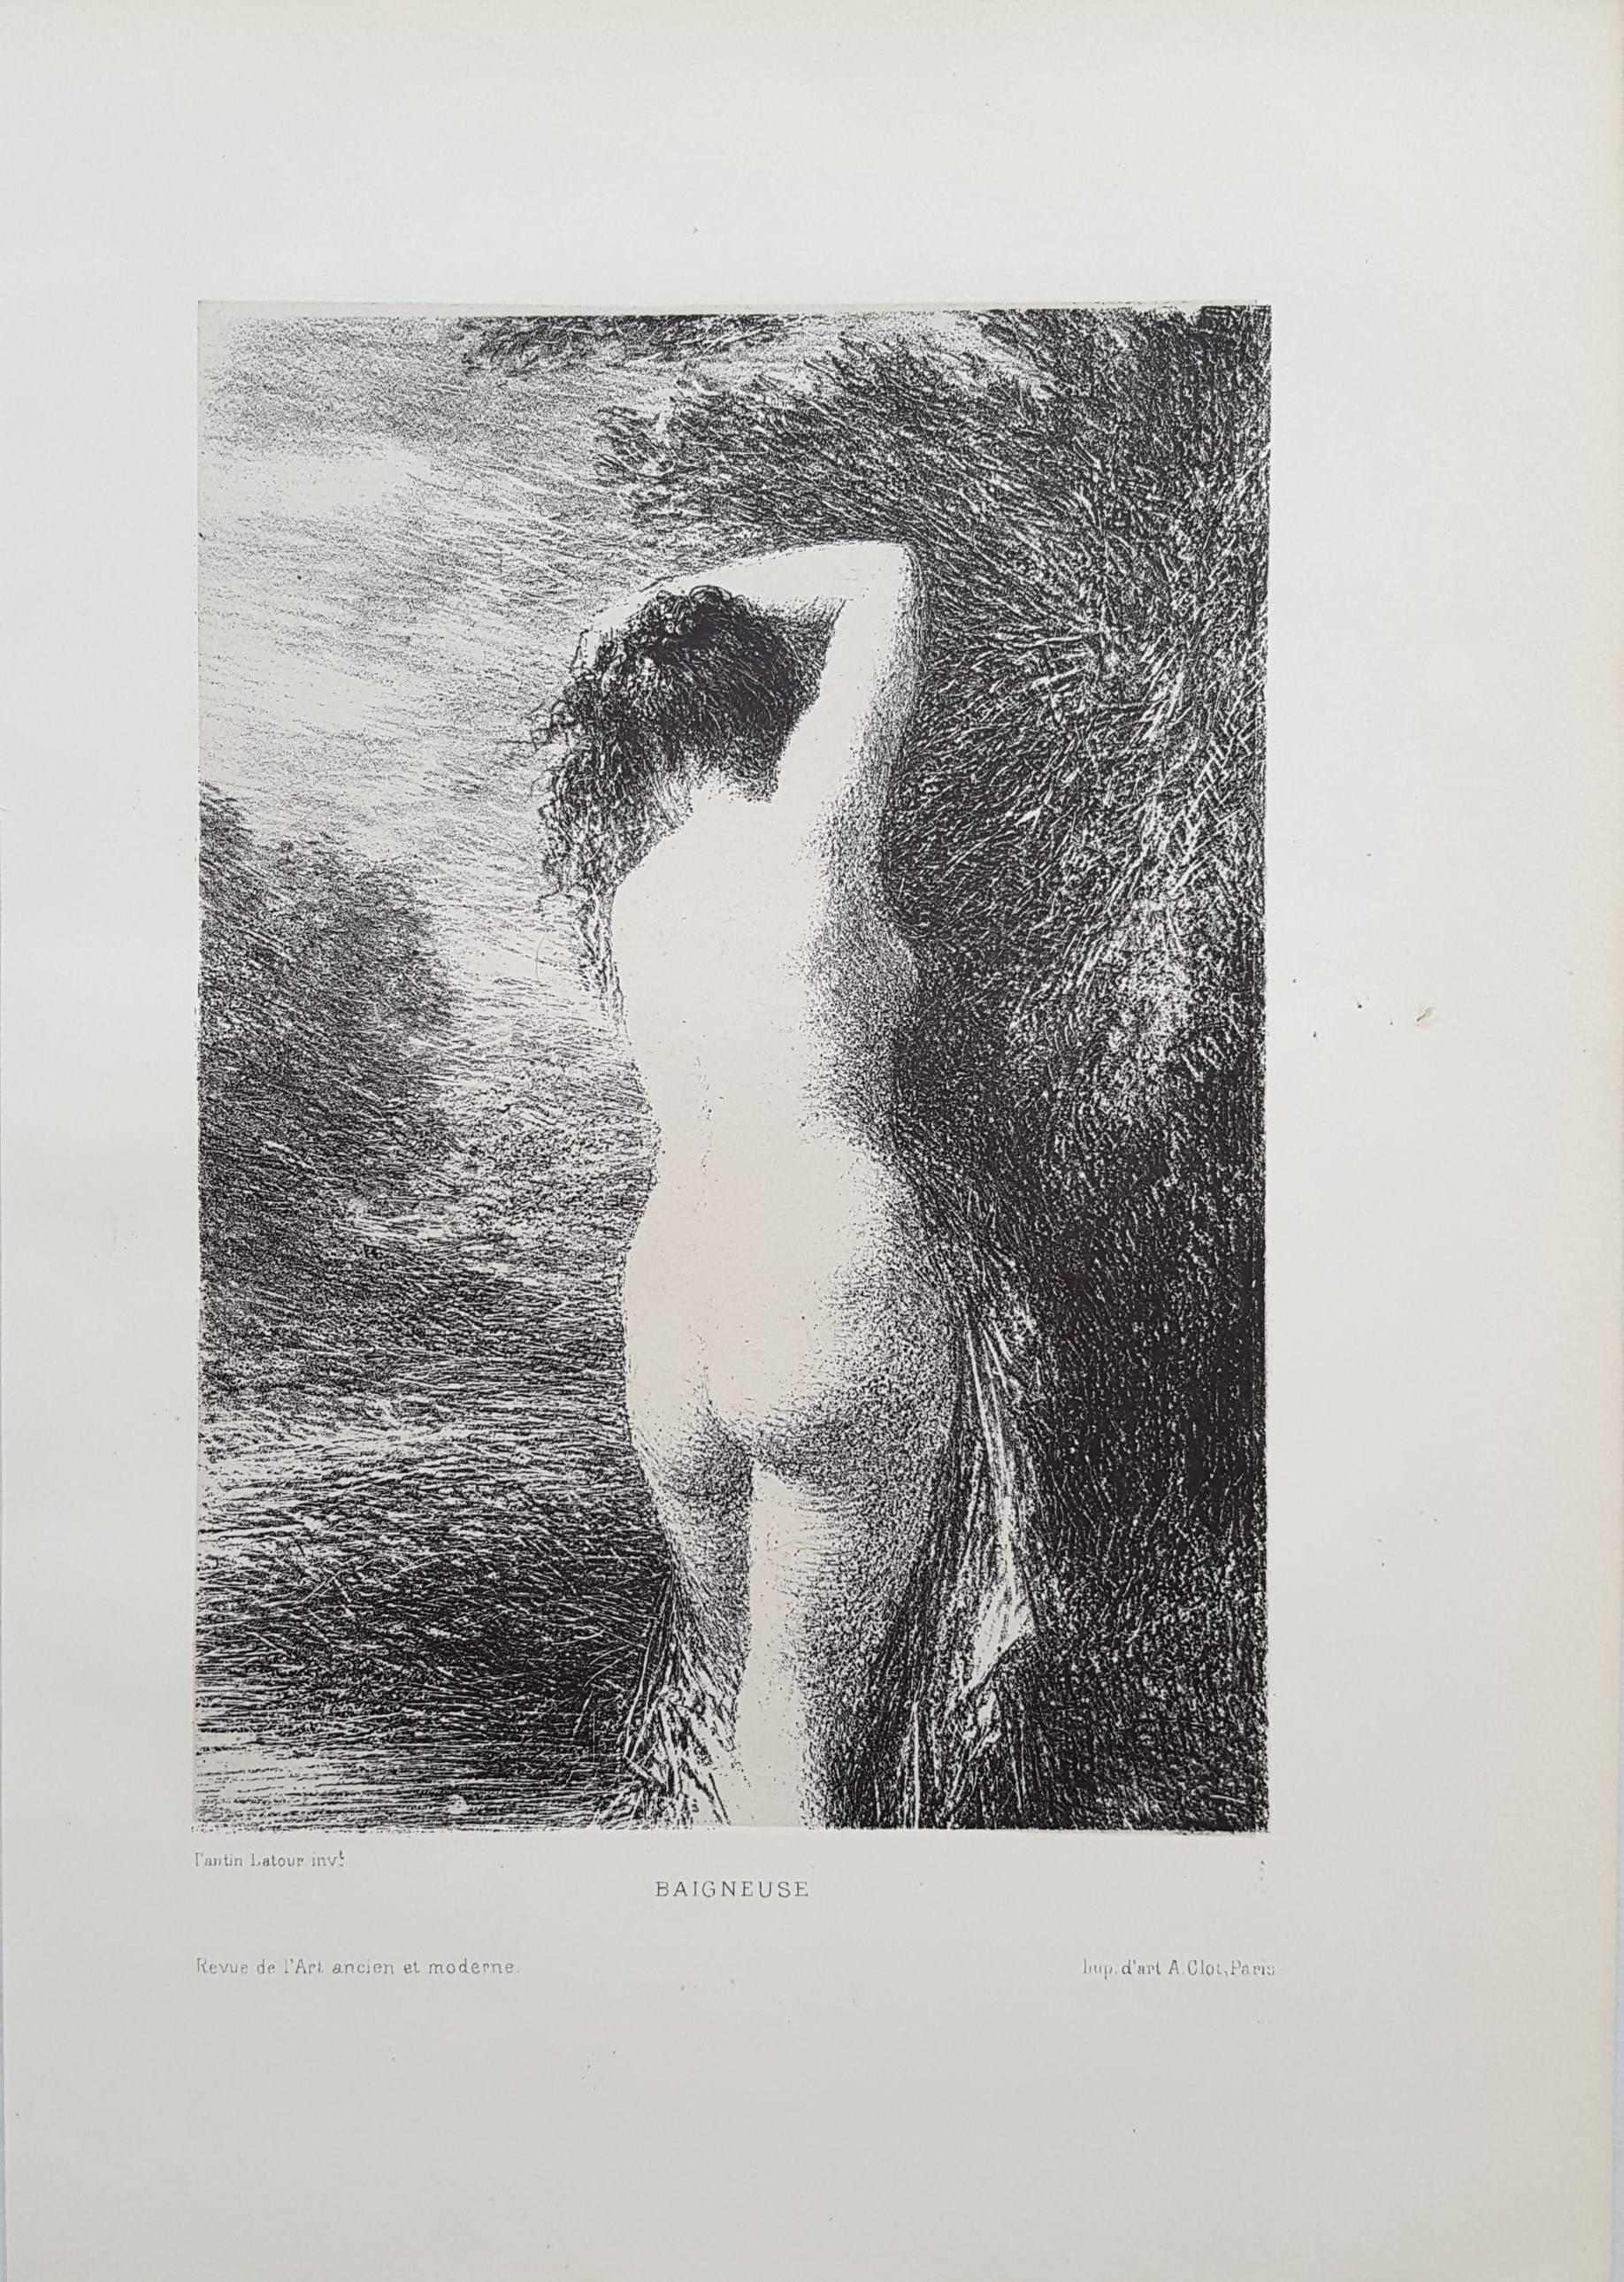 Baigneuse - Print by Henri Fantin-Latour